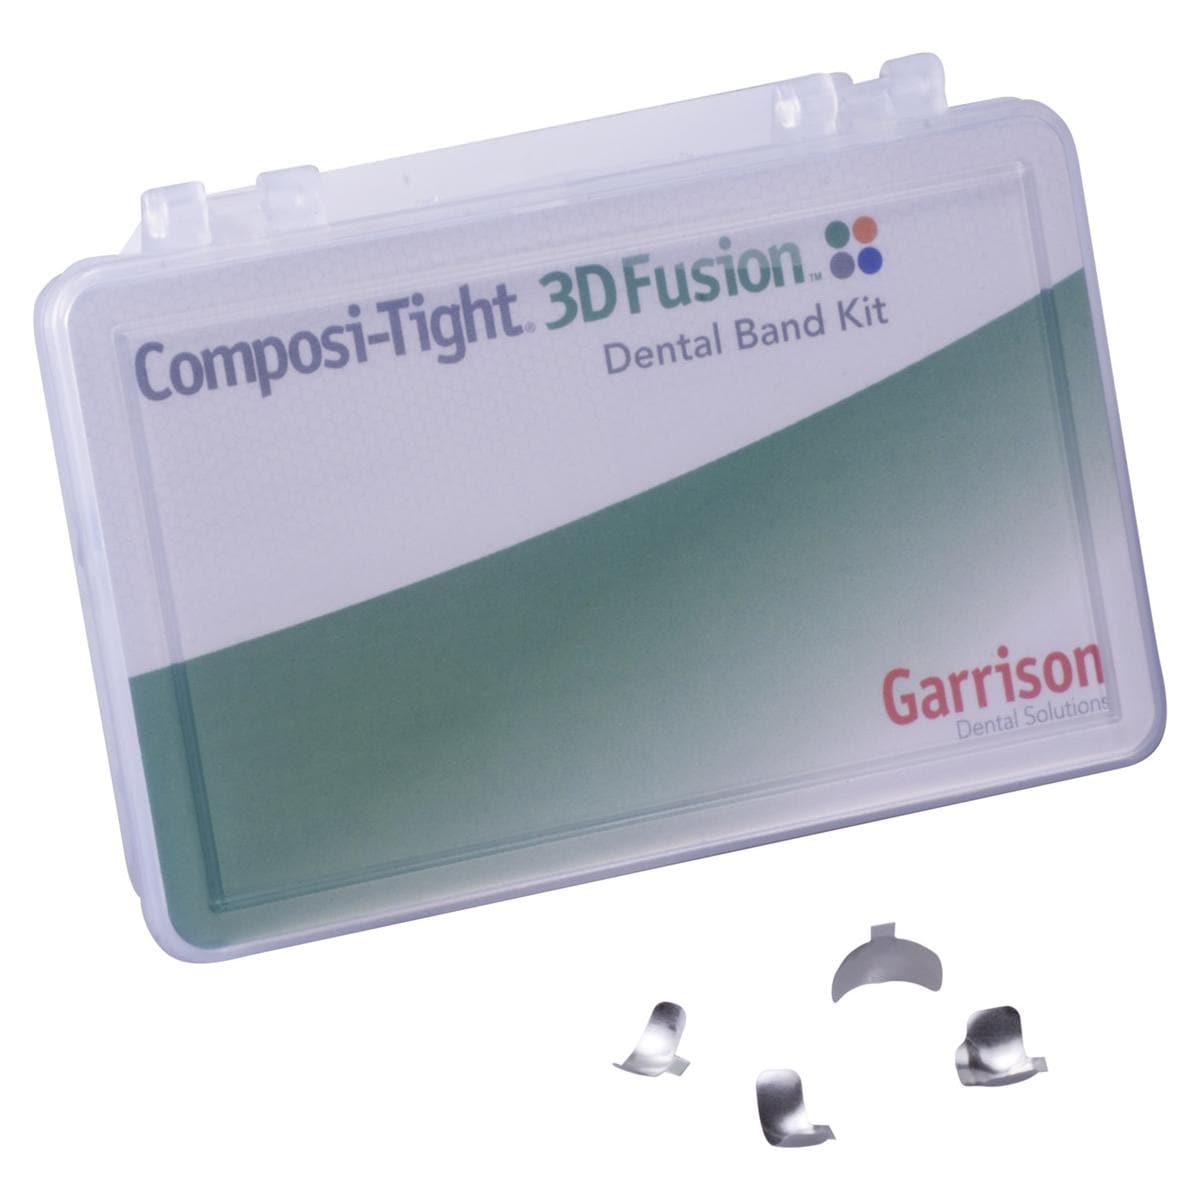 Composi-Tight 3D Fusion Firm matrixen - Kit - FXHB04